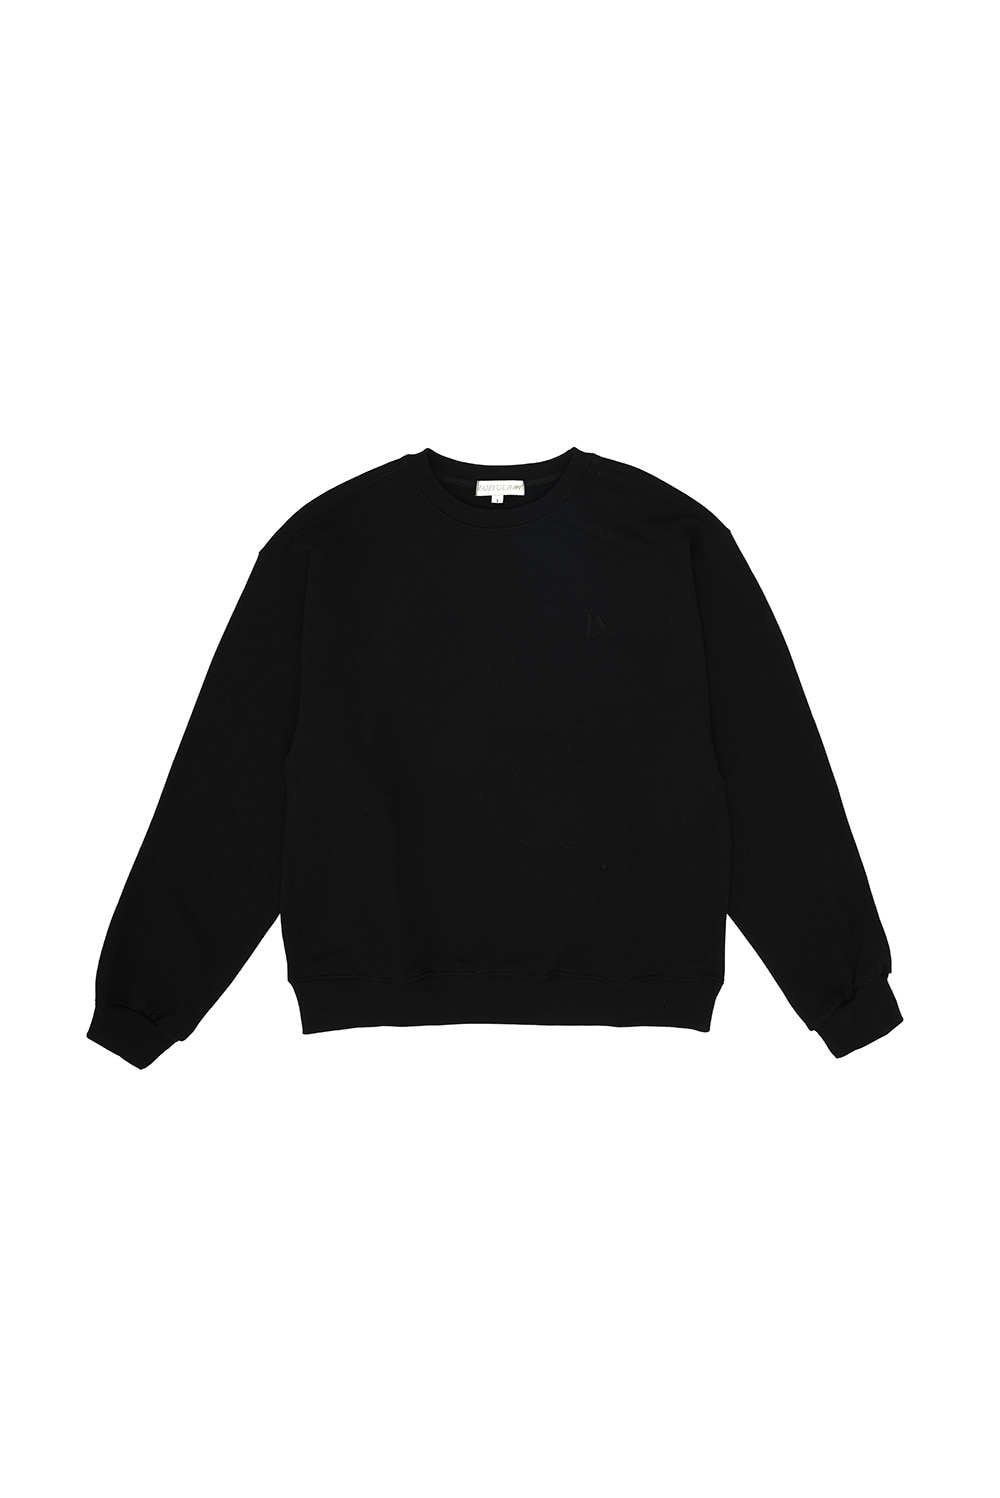 30%--Sweatshirt(black)